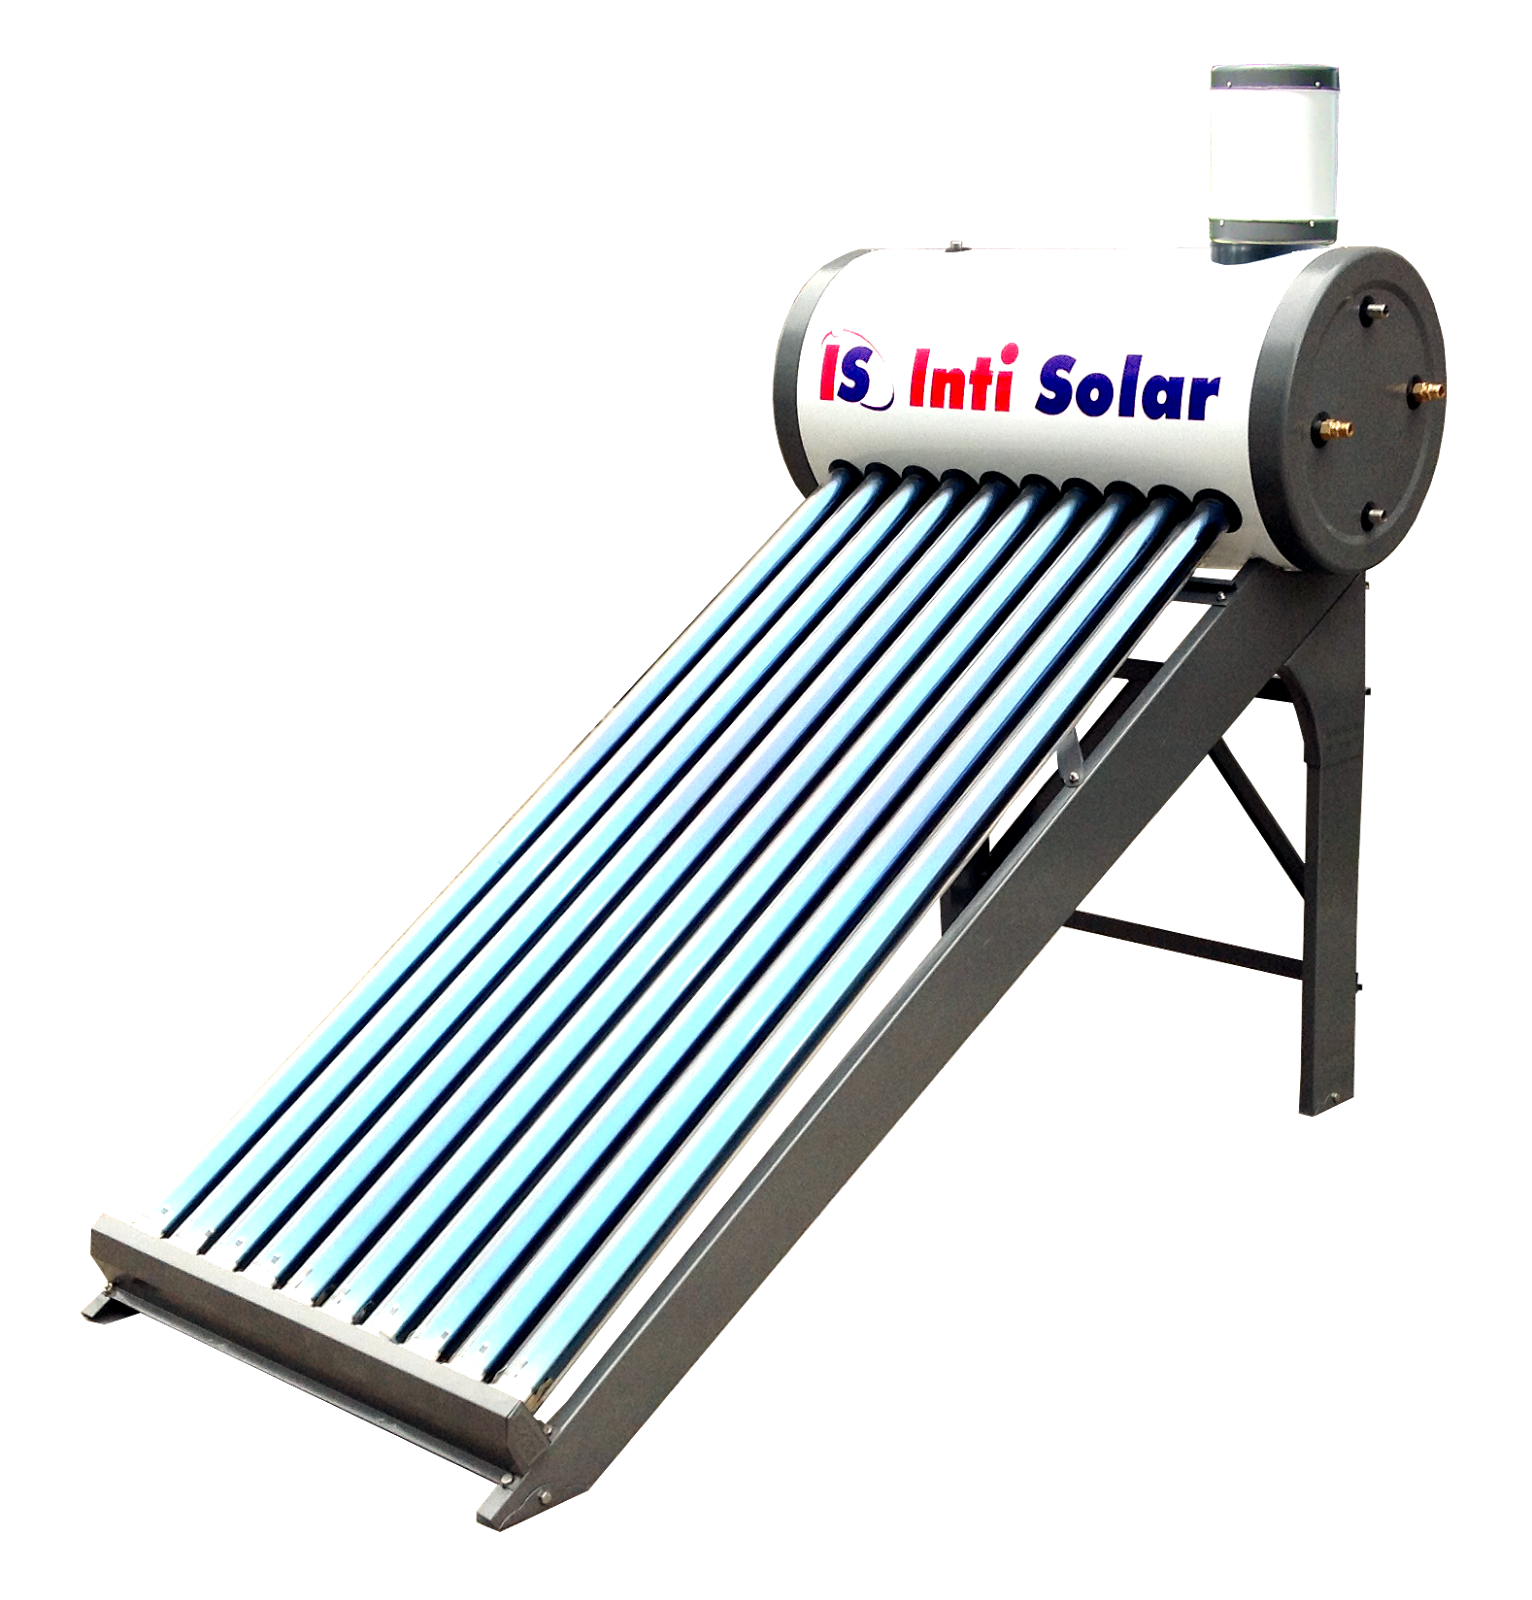 service inti solar pecenongan jakarta pusat